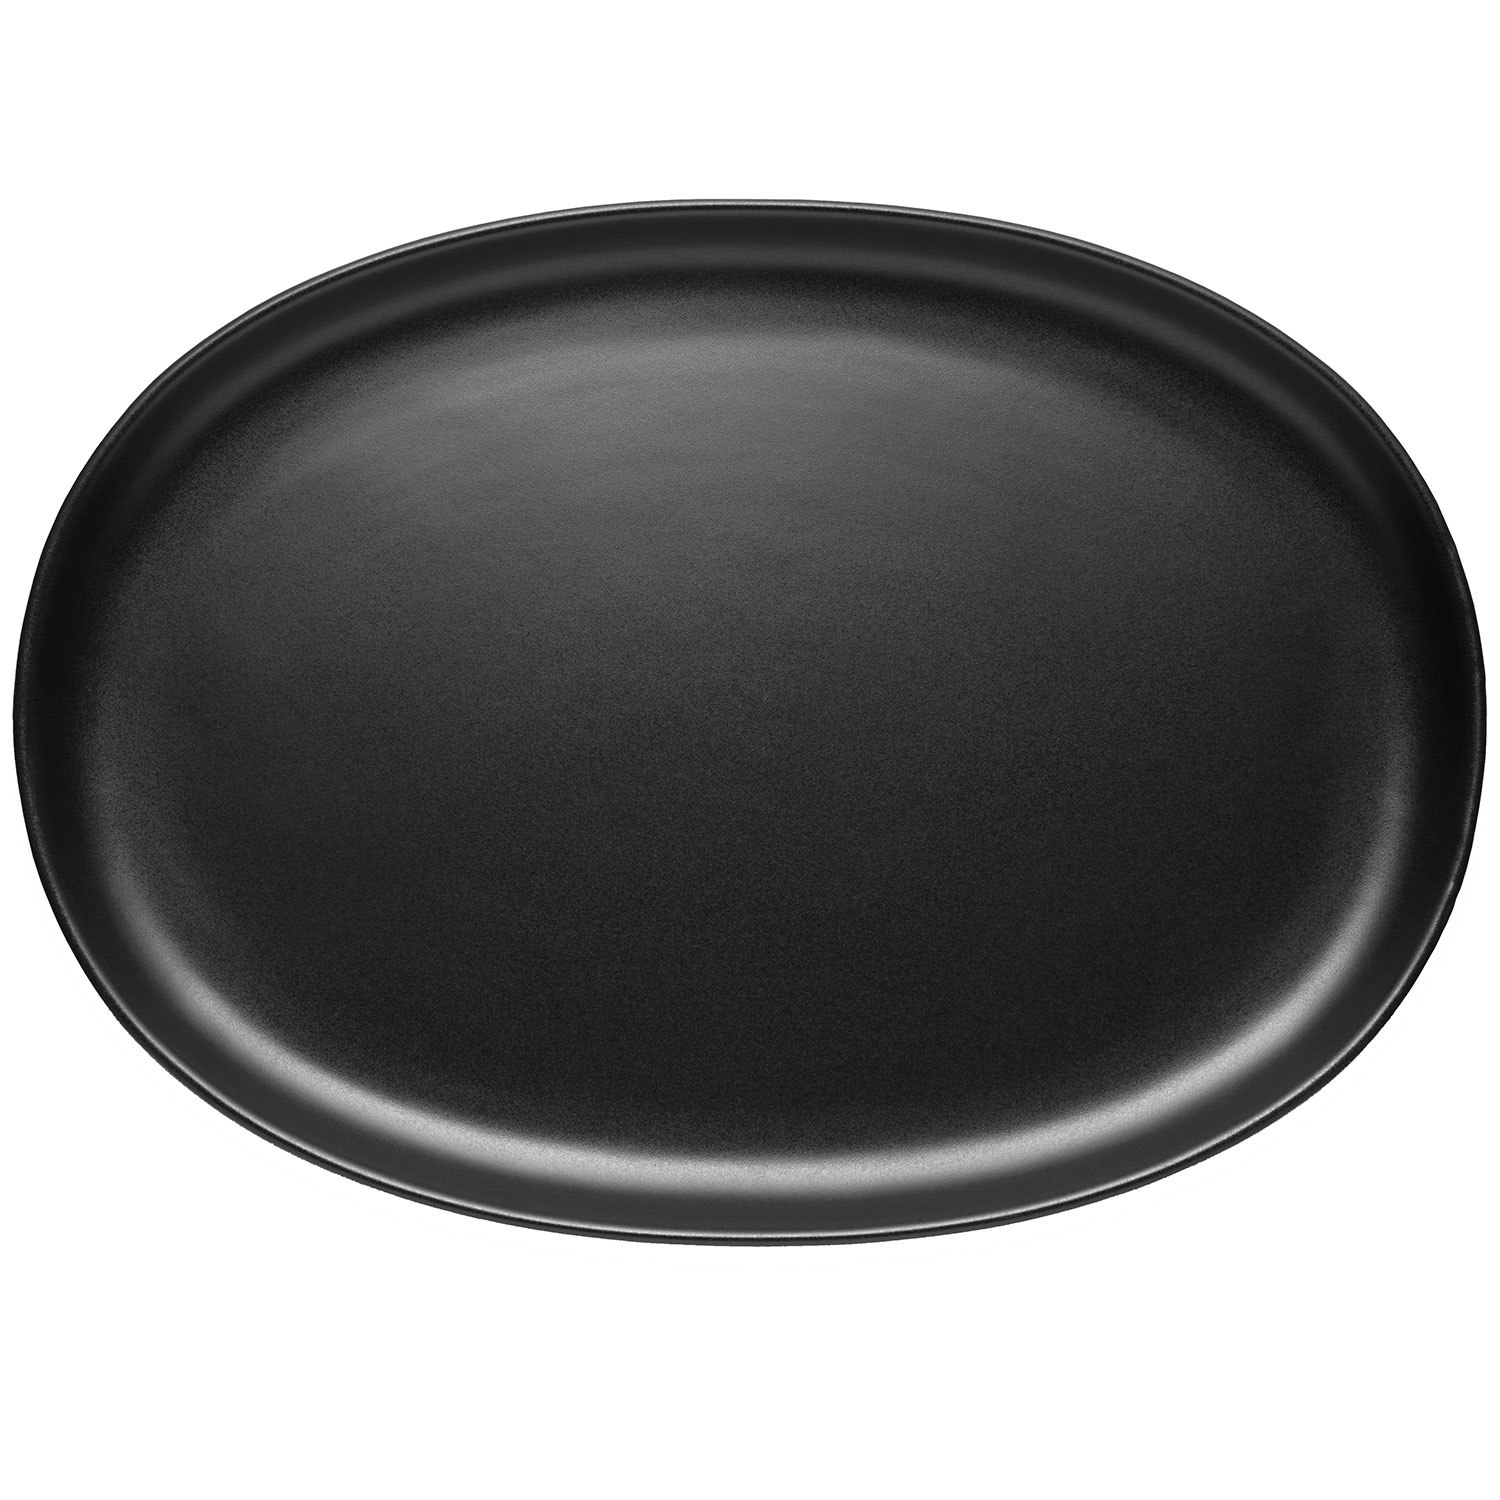 https://royaldesign.com/image/2/eva-solo-oval-plate-32cm-nordic-k-0